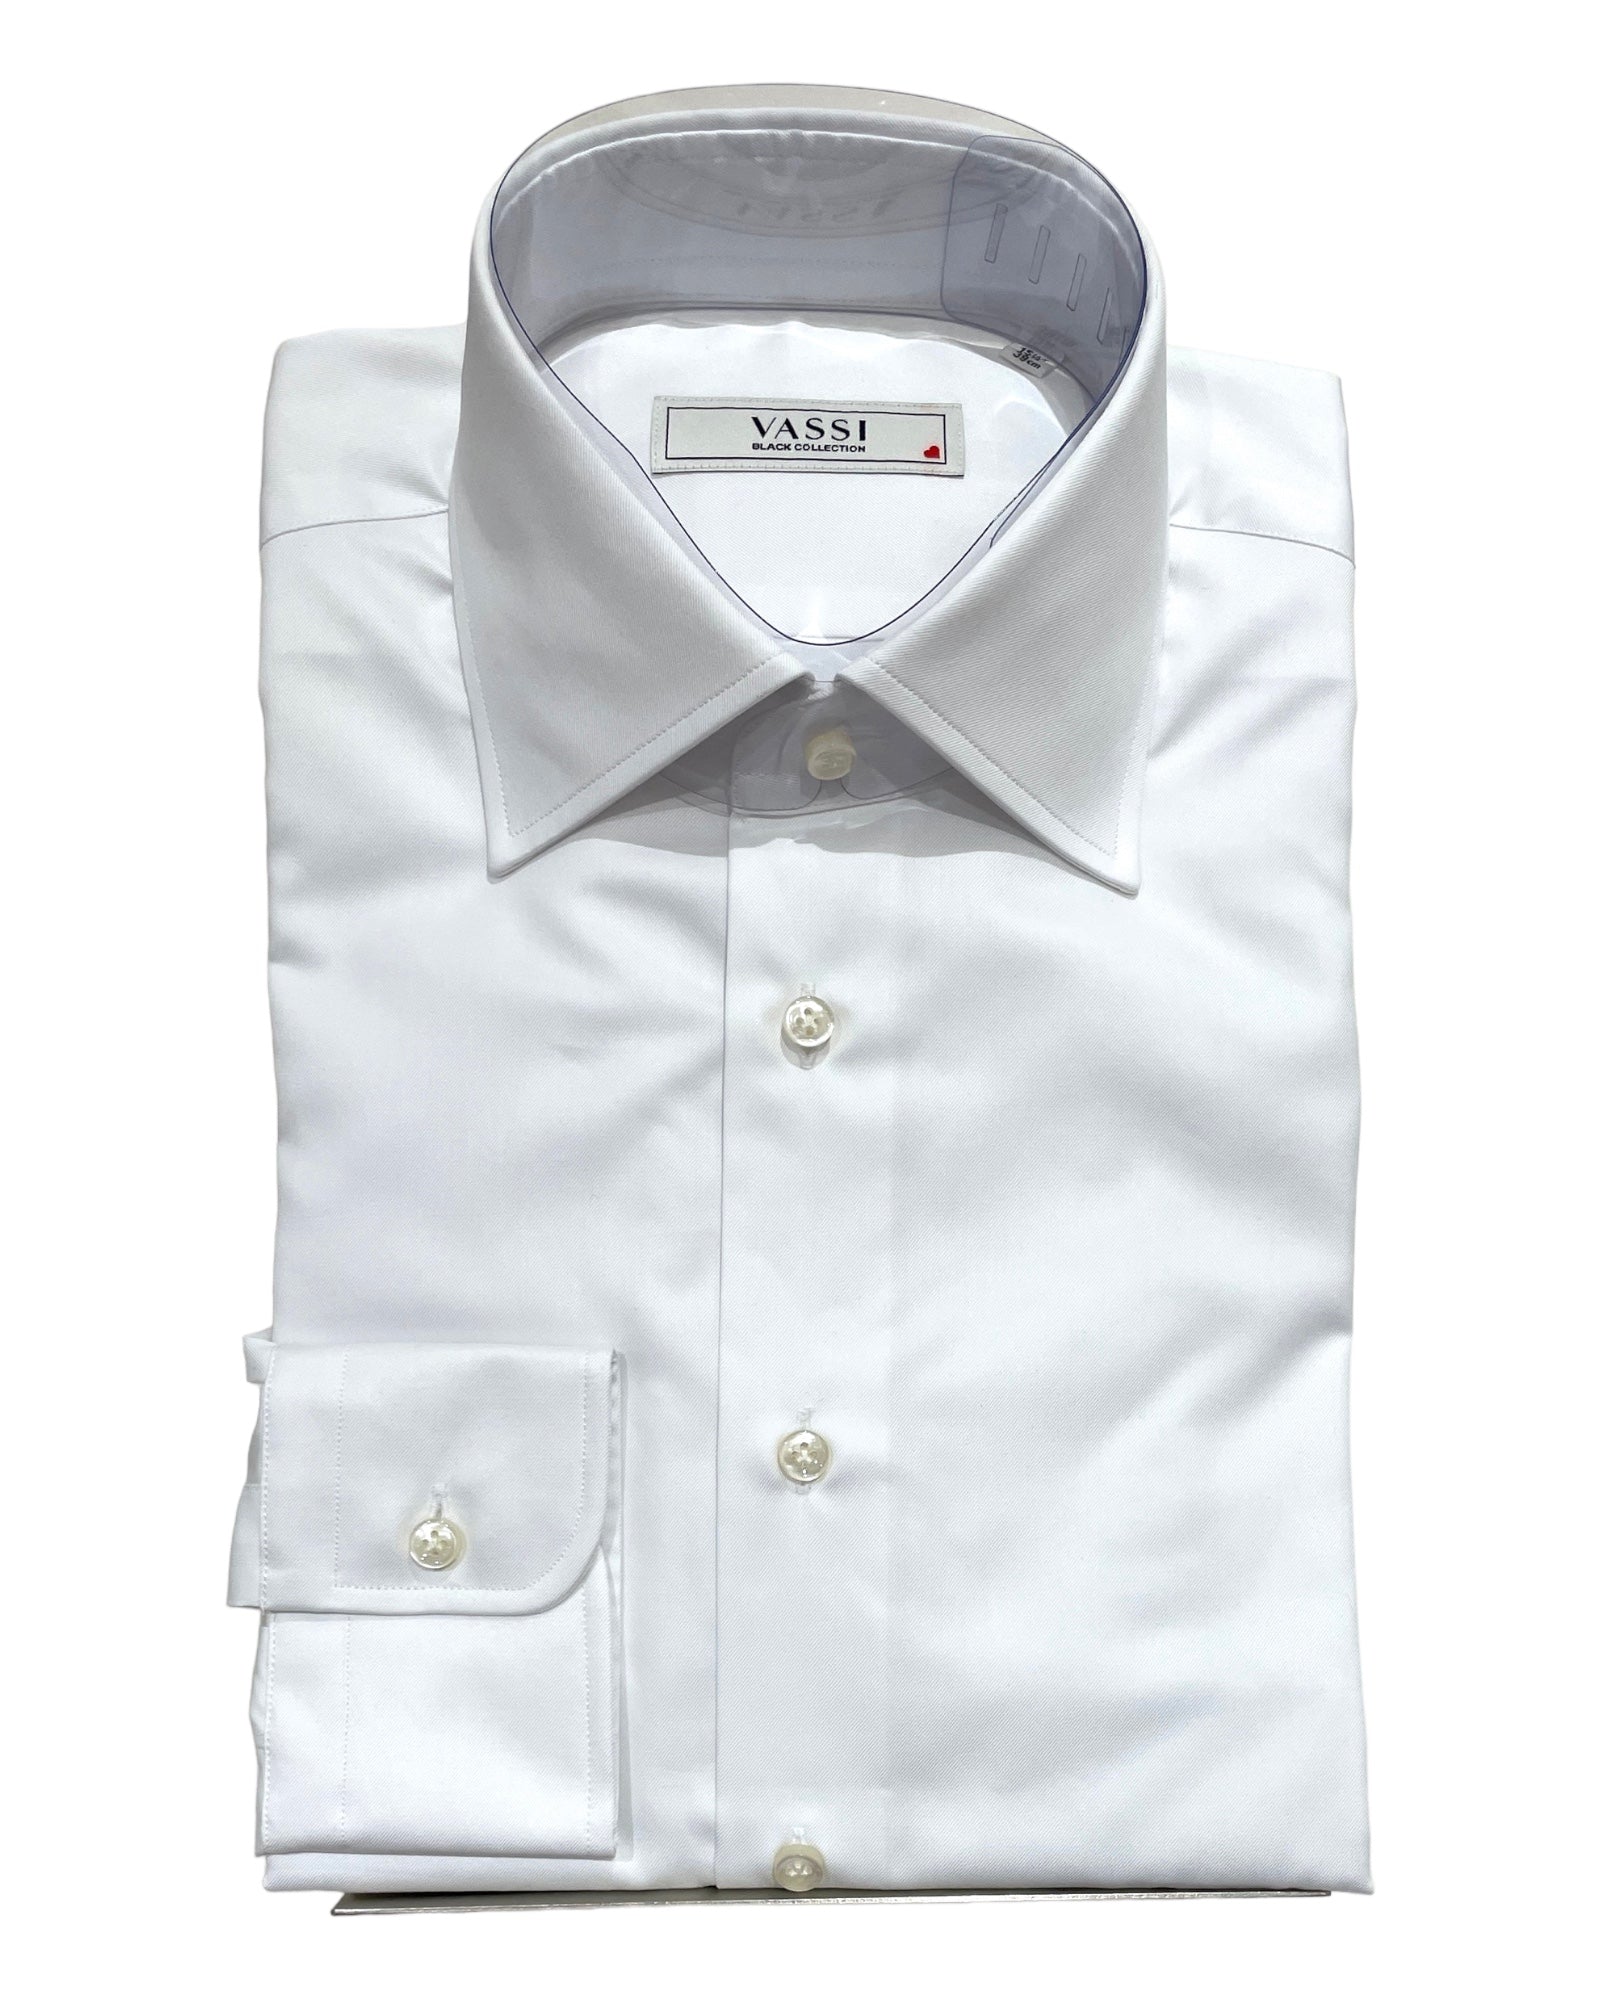 Essential Classic Dress Shirt - Plain White DRESS SHIRTS15.5